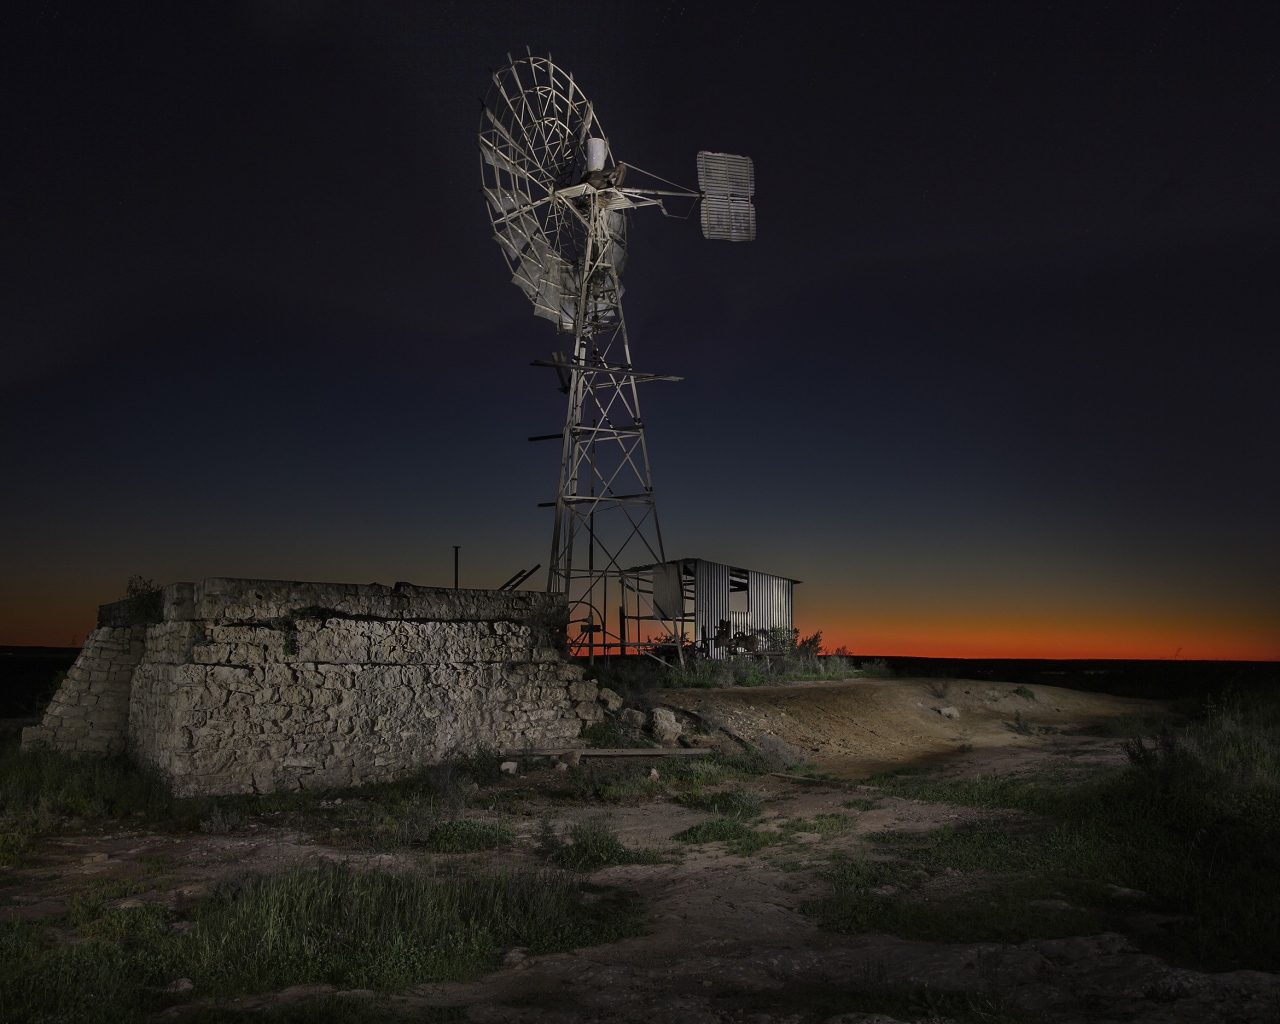 Wind turbine under the night sky in Australia